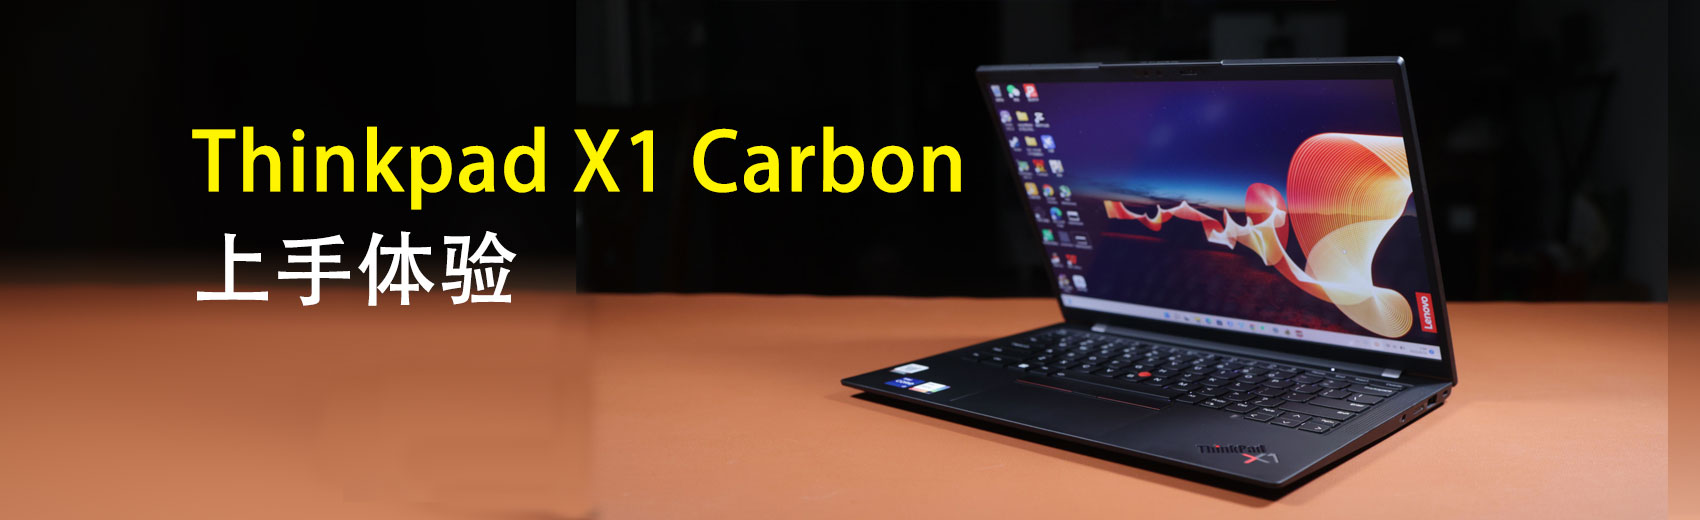 Thinkpad X1 Carbon上手体验